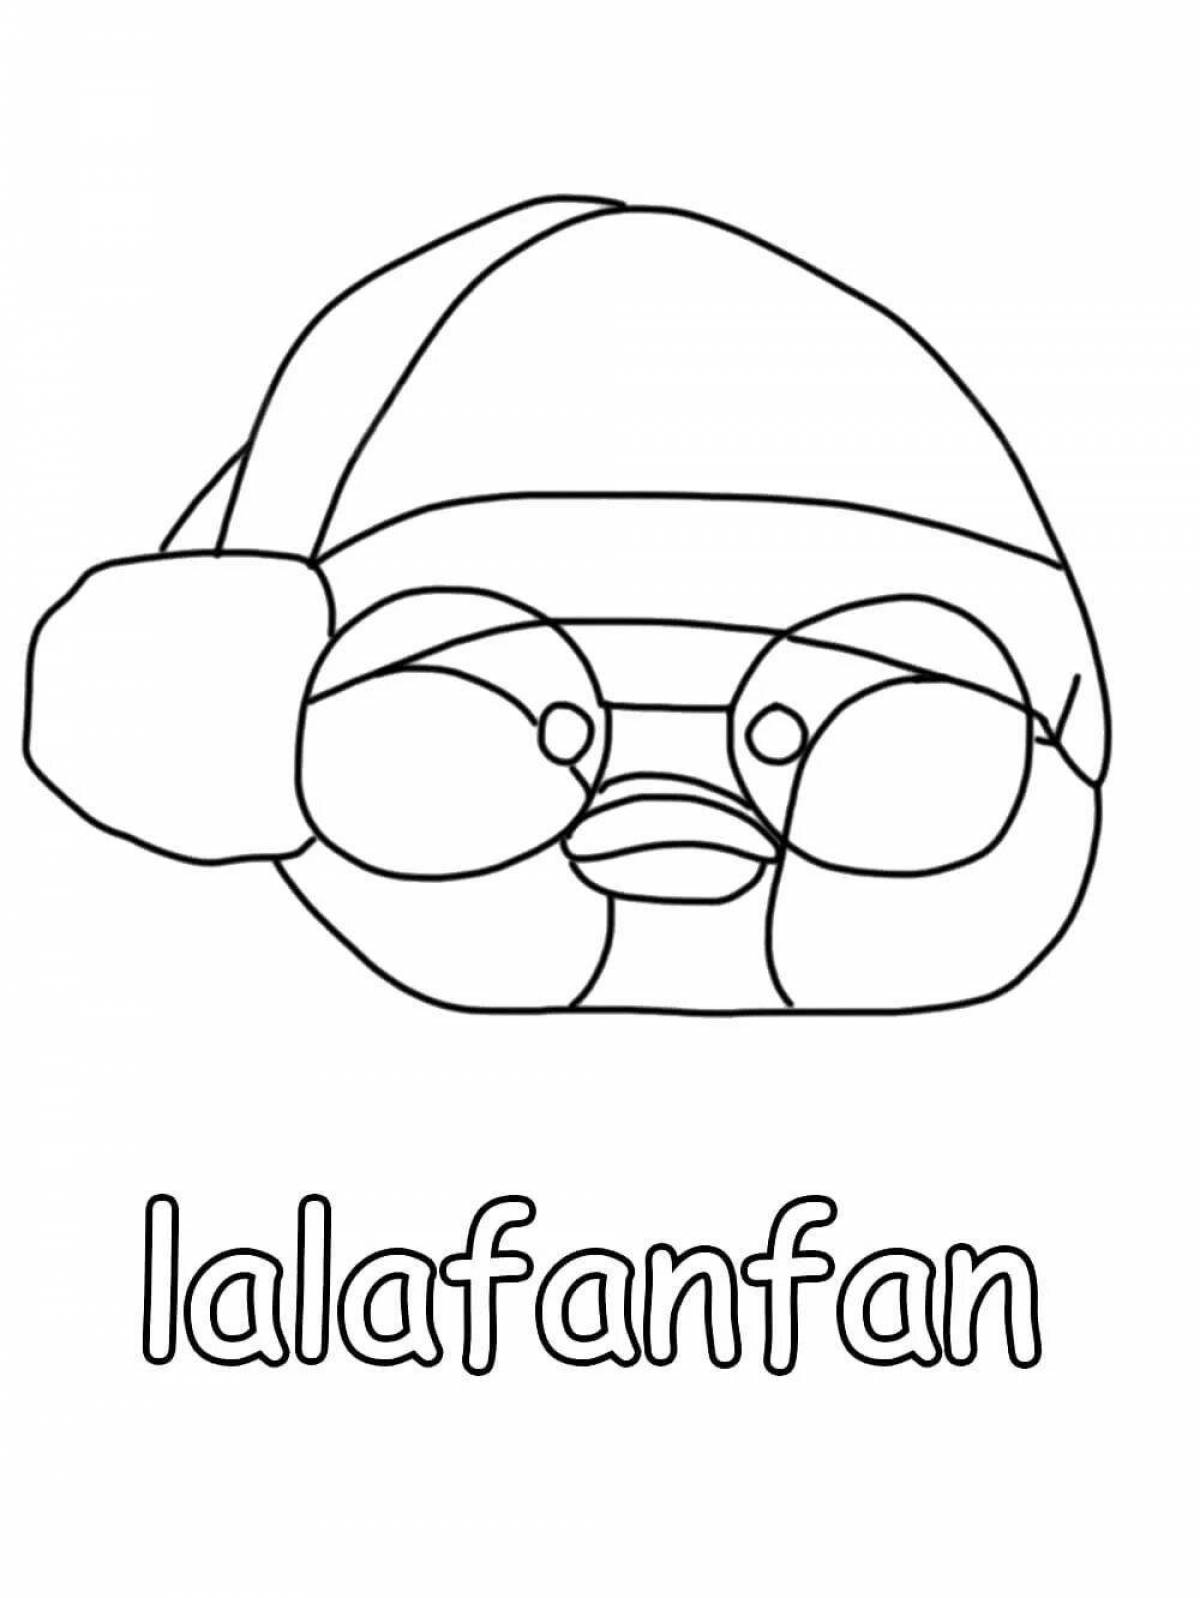 Adorable little duck coloring book - lalafanfan